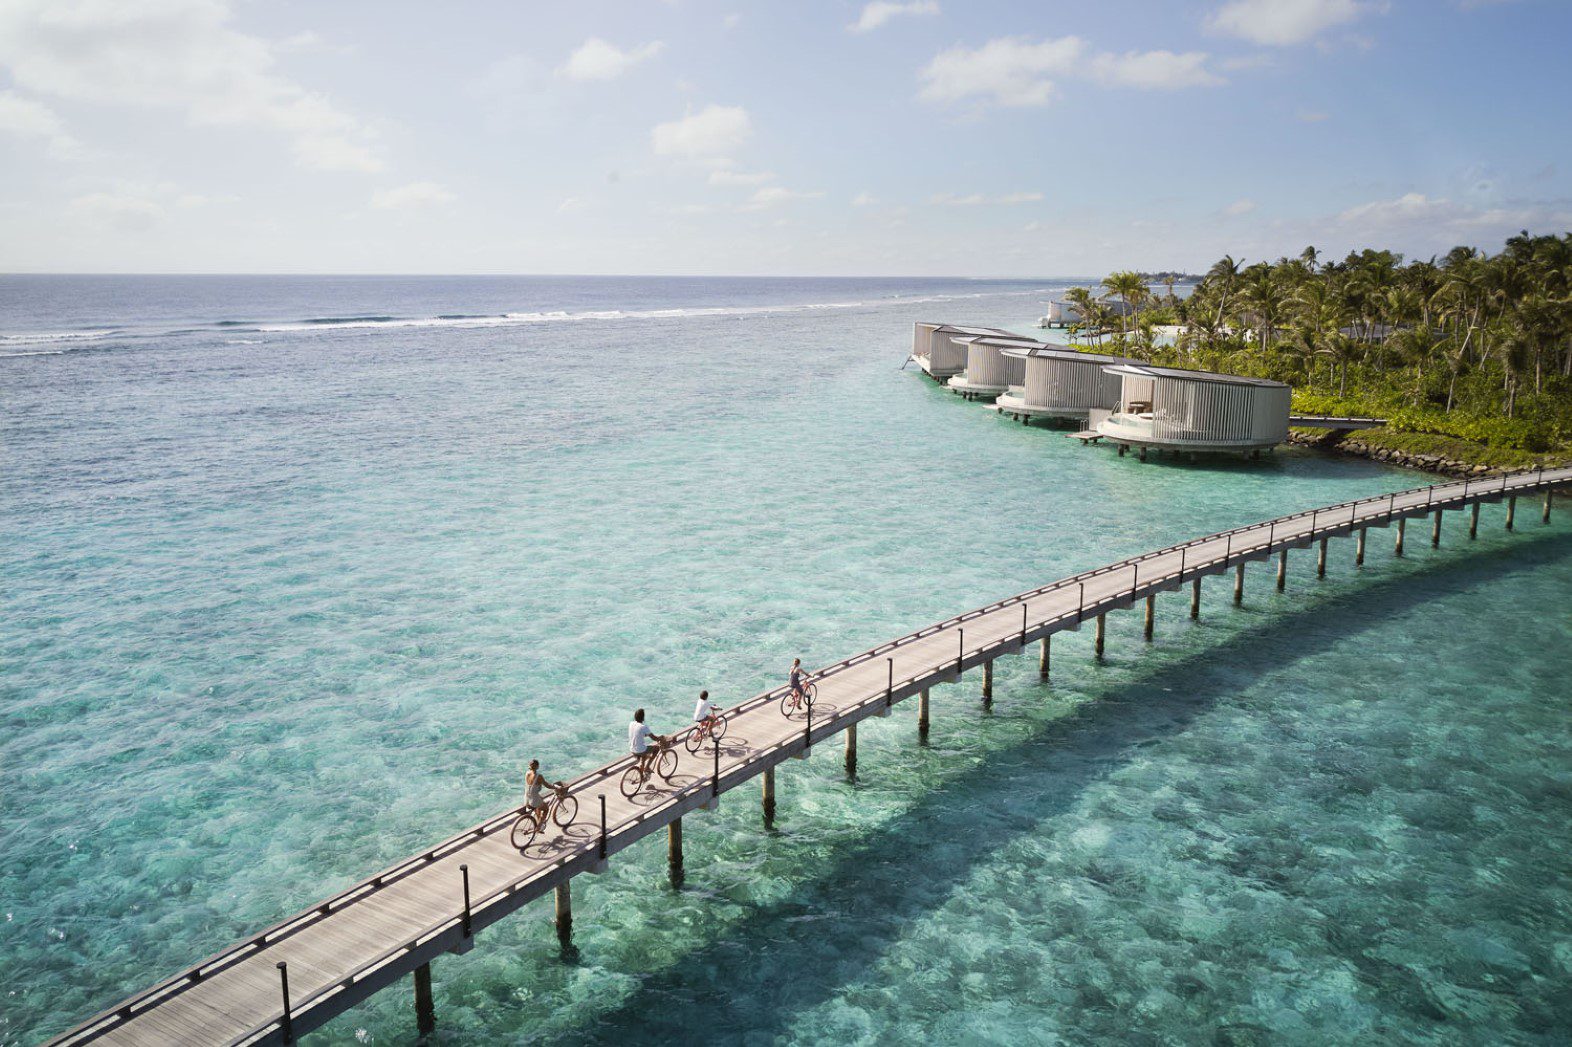 Experiences at The Ritz-Carlton Maldives, Fari Islands